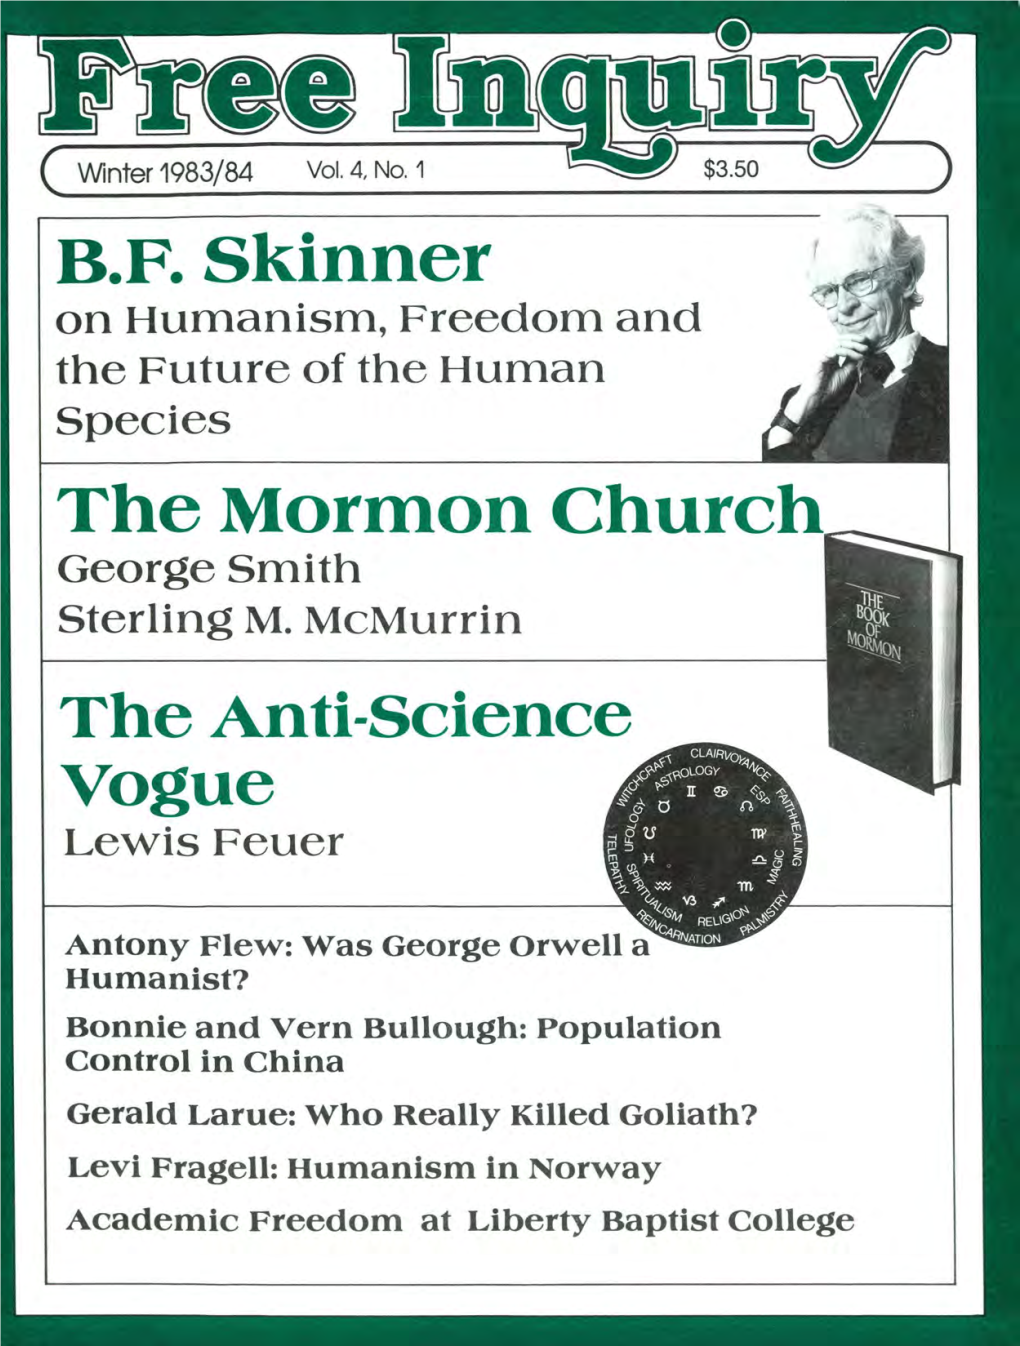 B.F. Skinner the Mormon Church